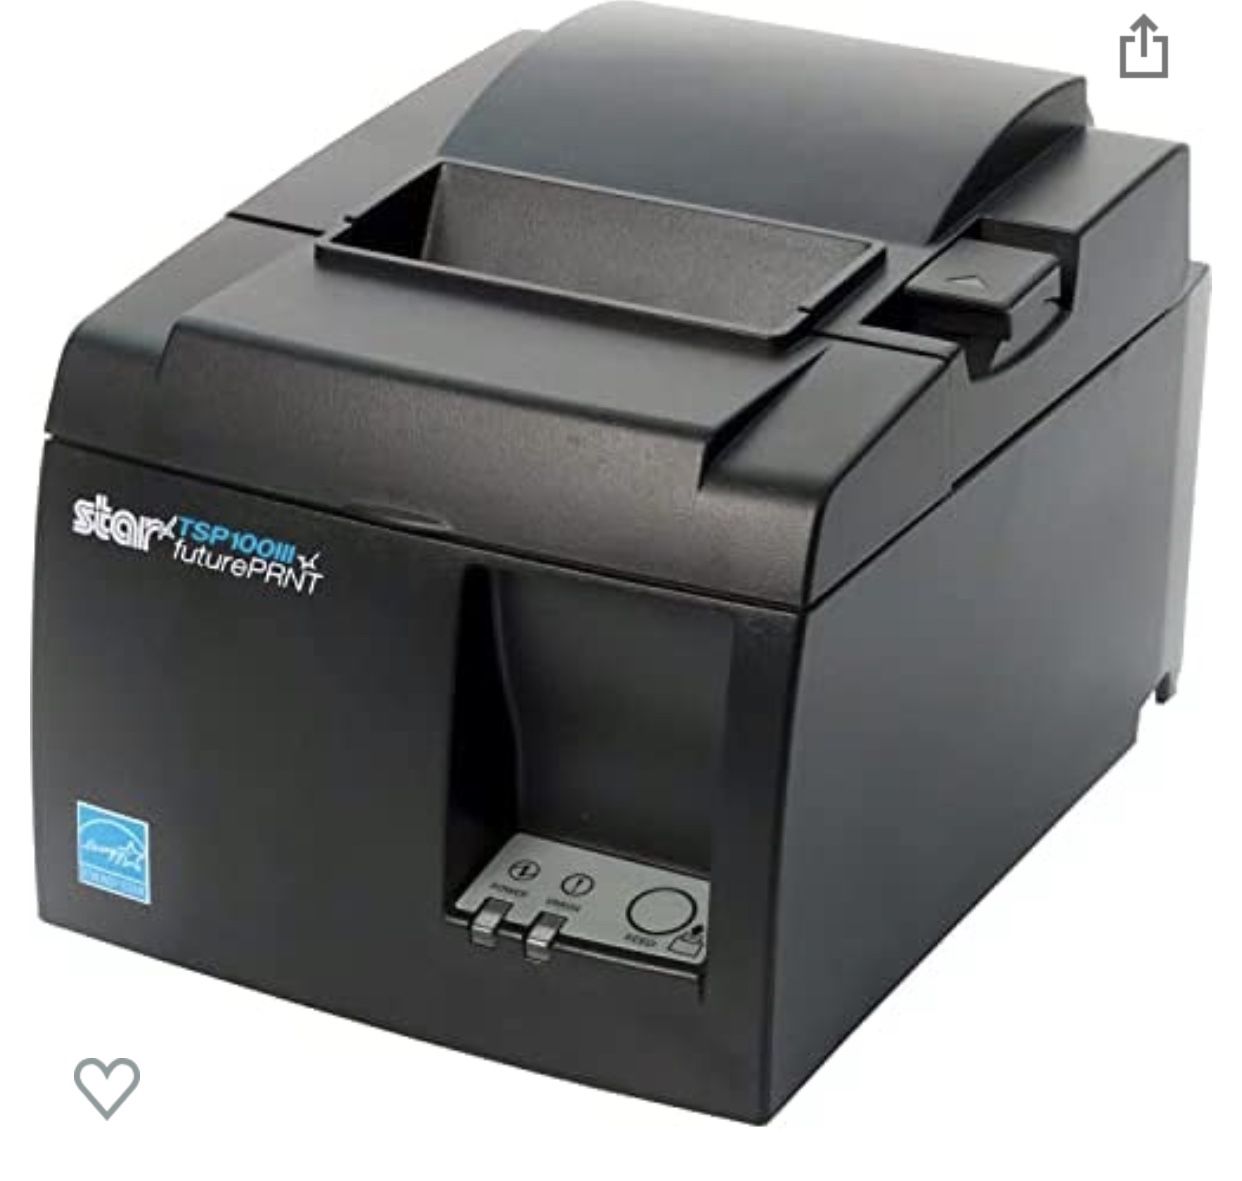 Star TSP100 III Future Print / Receipt Printer